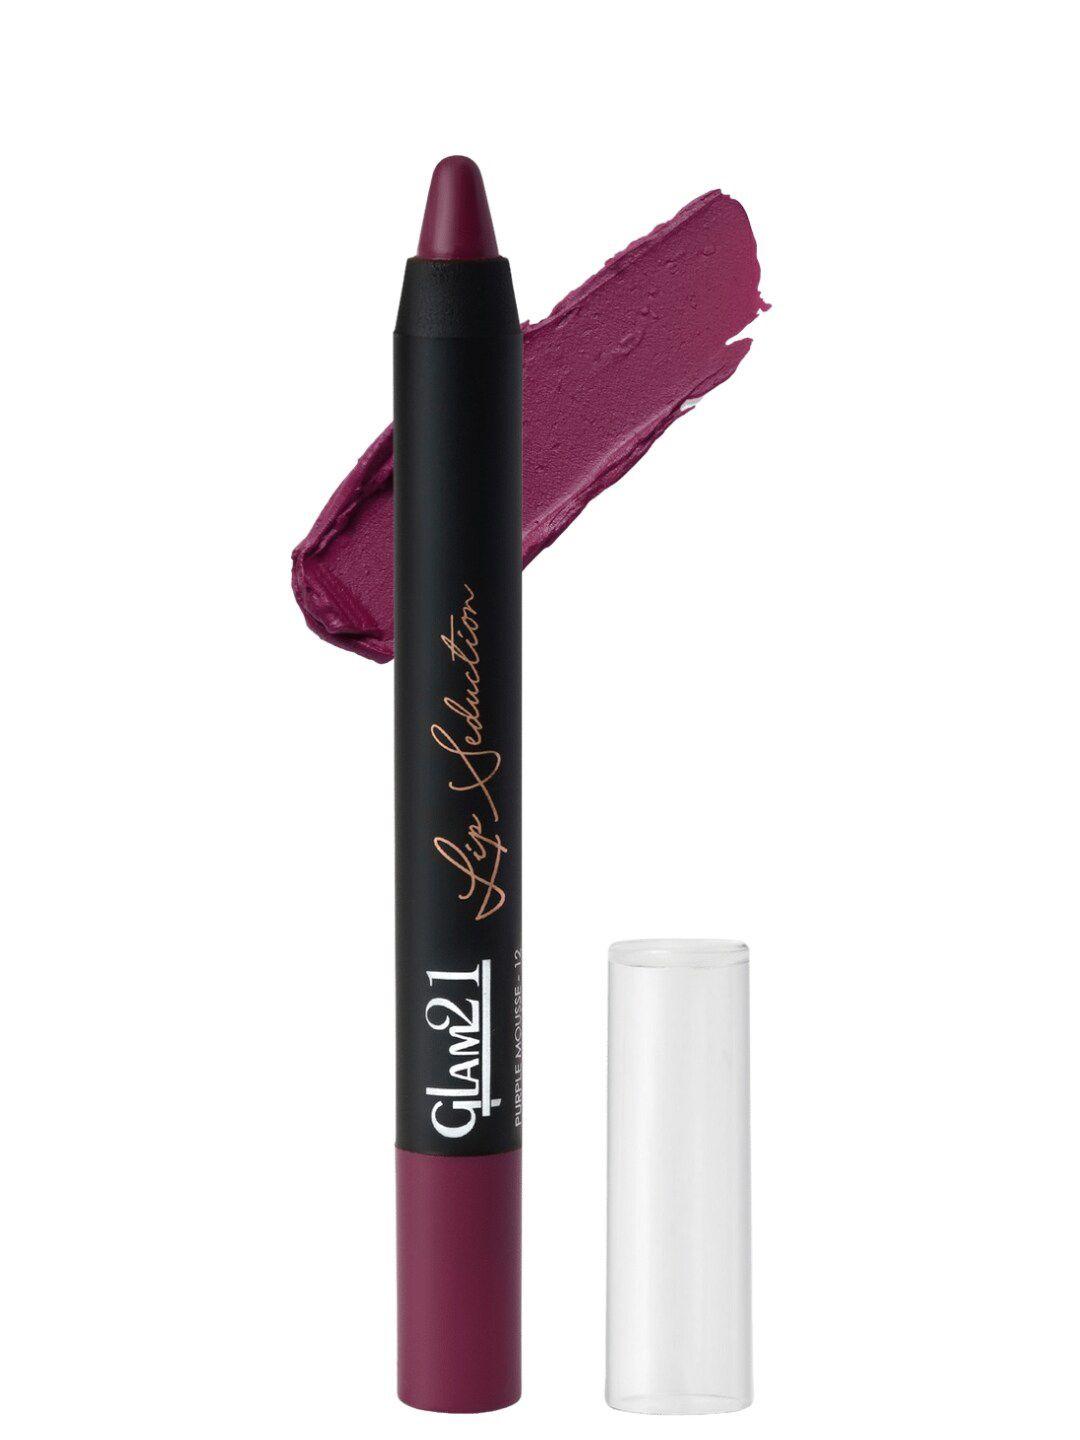 glam21 lip seduction non-transfer long-lasting crayon lipstick 2.8g - purple mousse 12